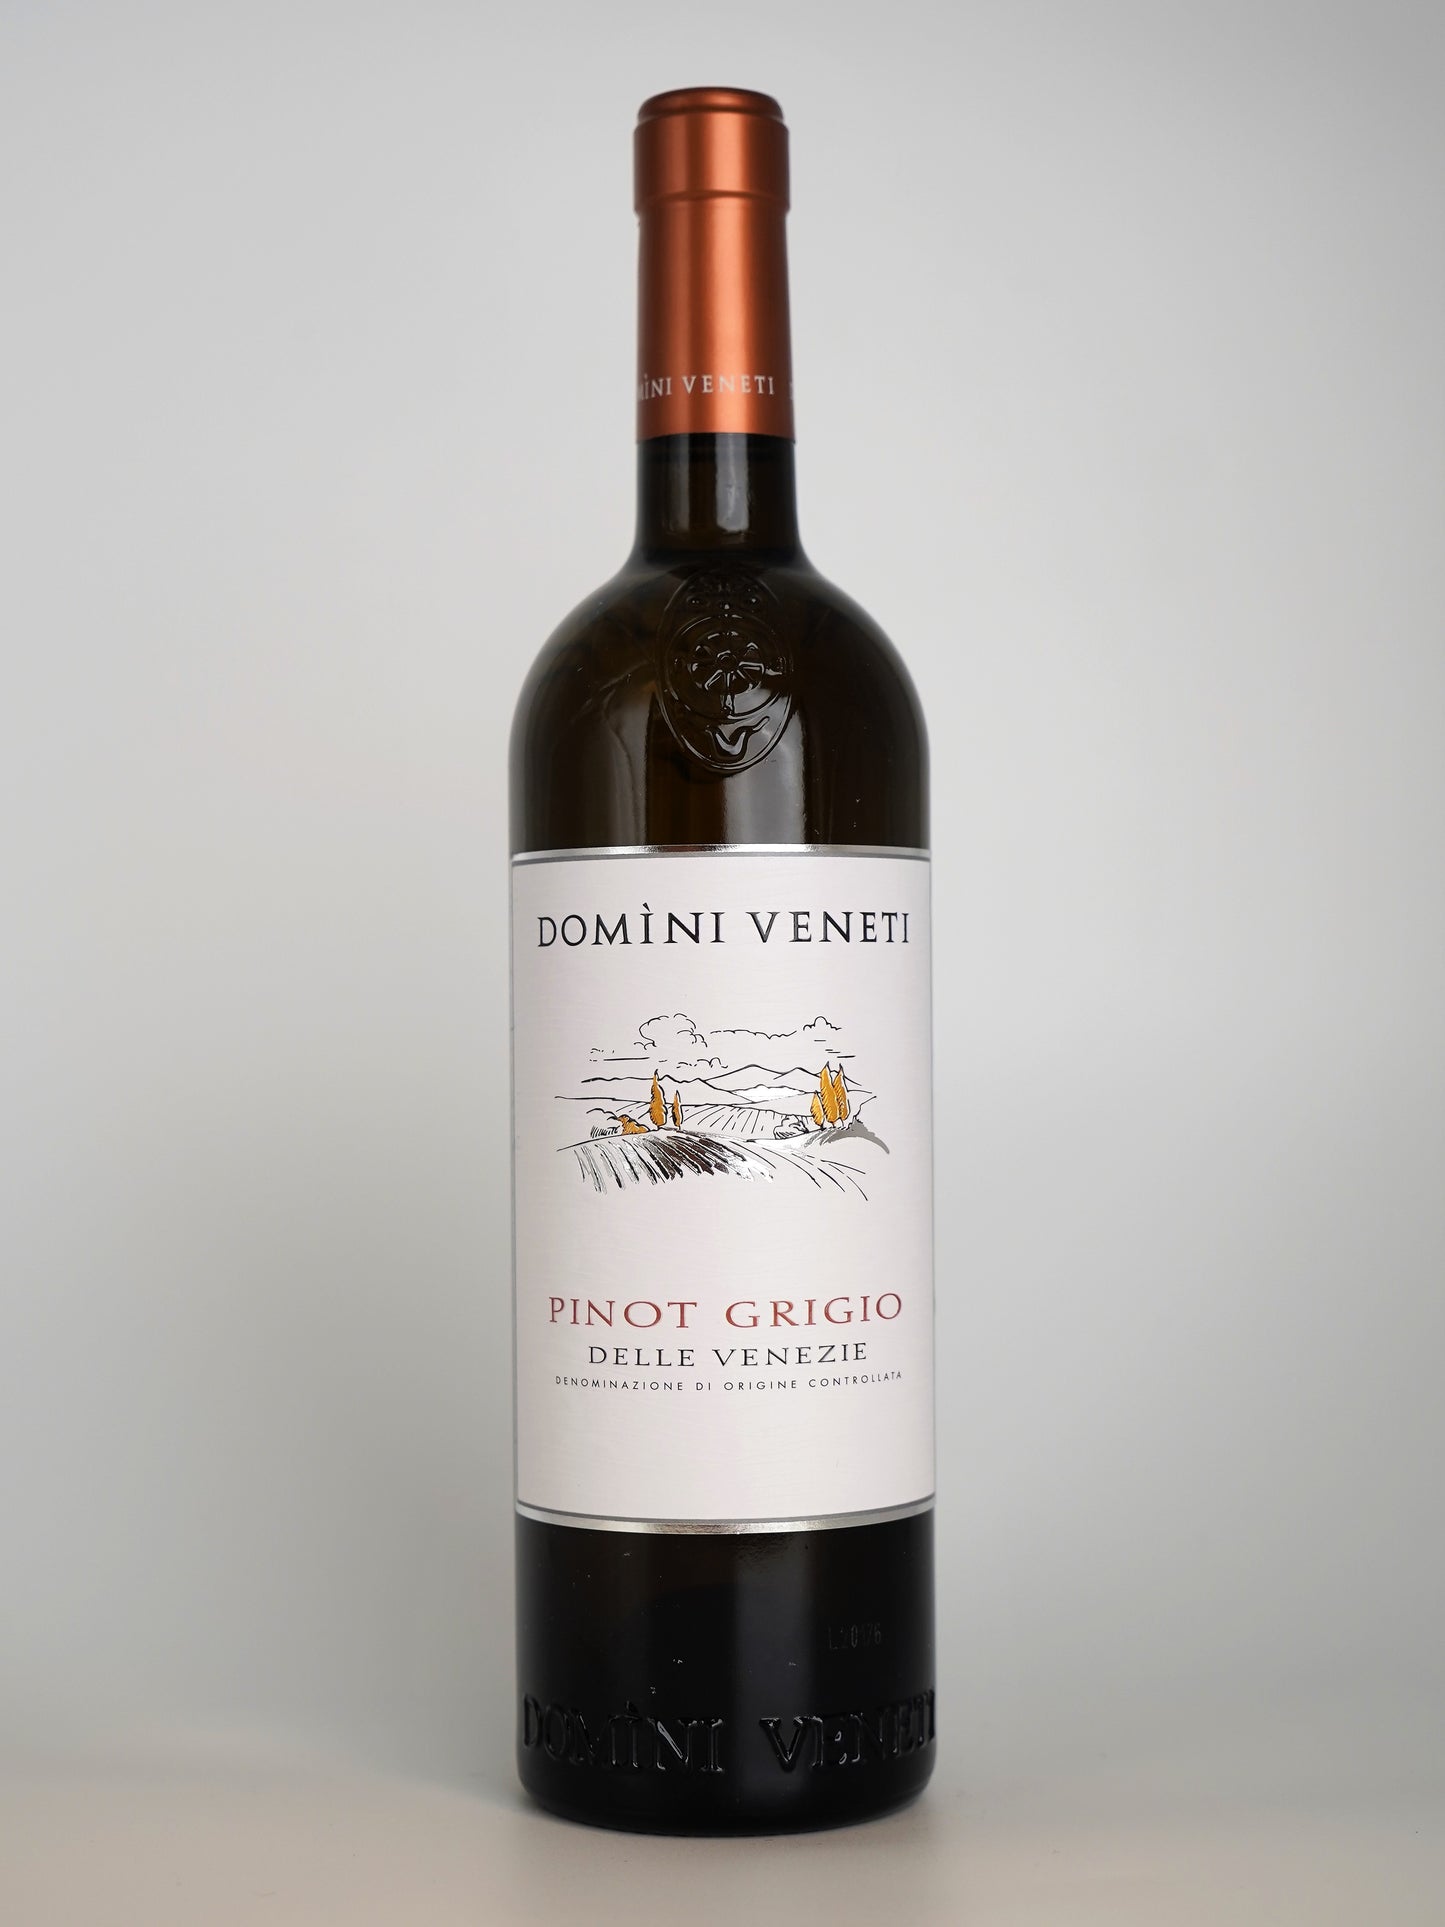 Pinot Grigio DOC Domini Veneti